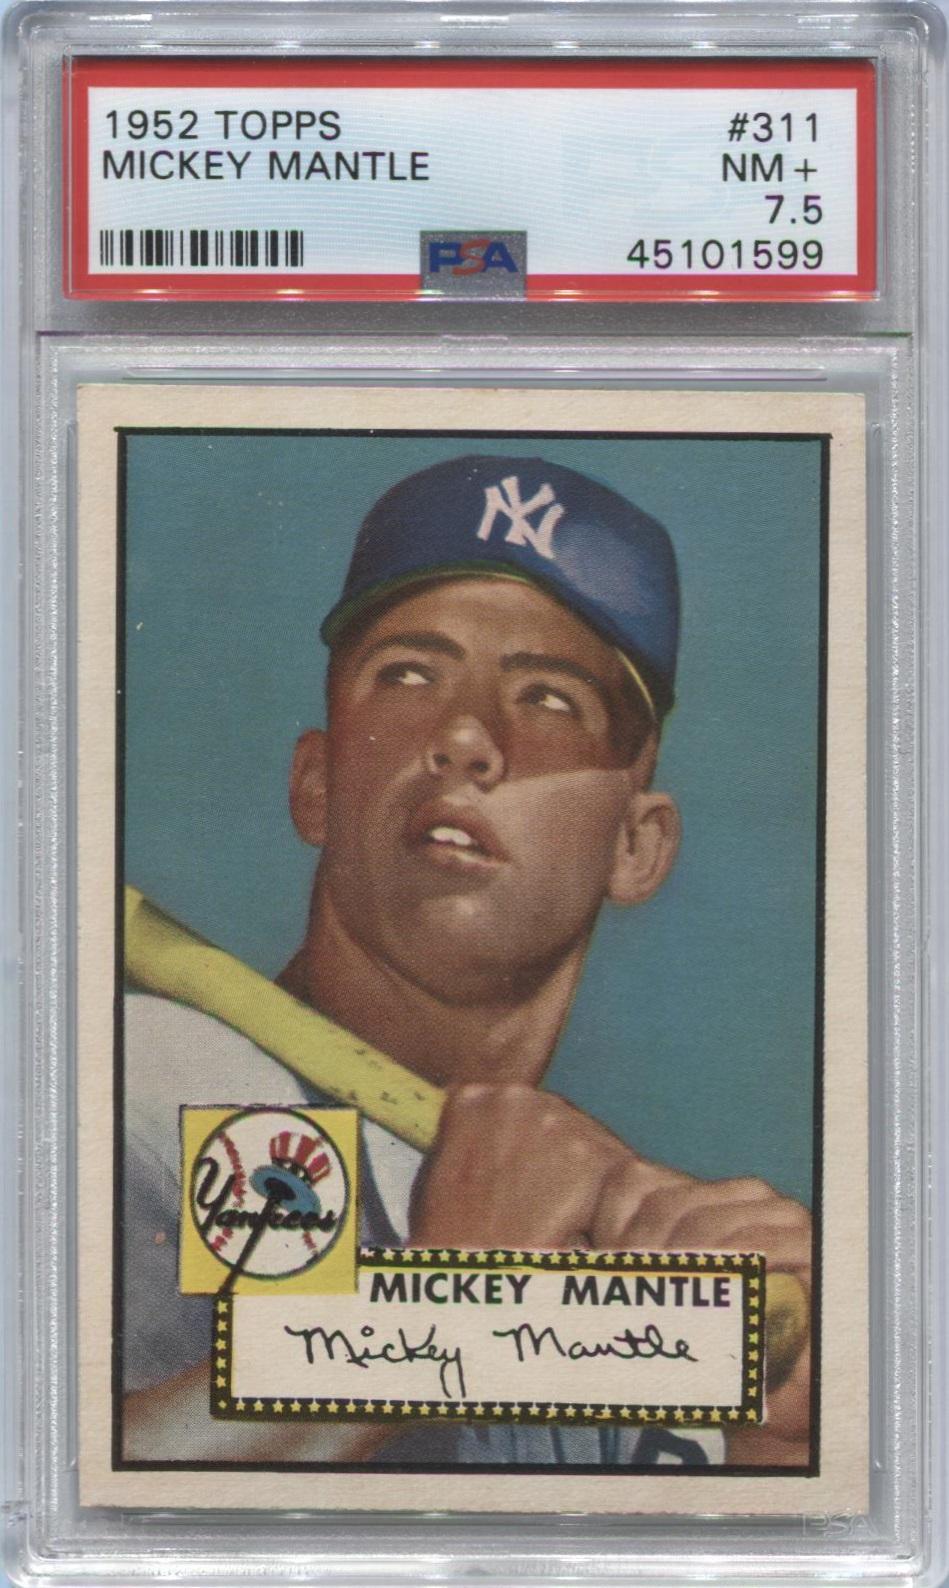 1952 Topps Mickey Mantle #311 Baseball Card 13 x 19"  Photo Print